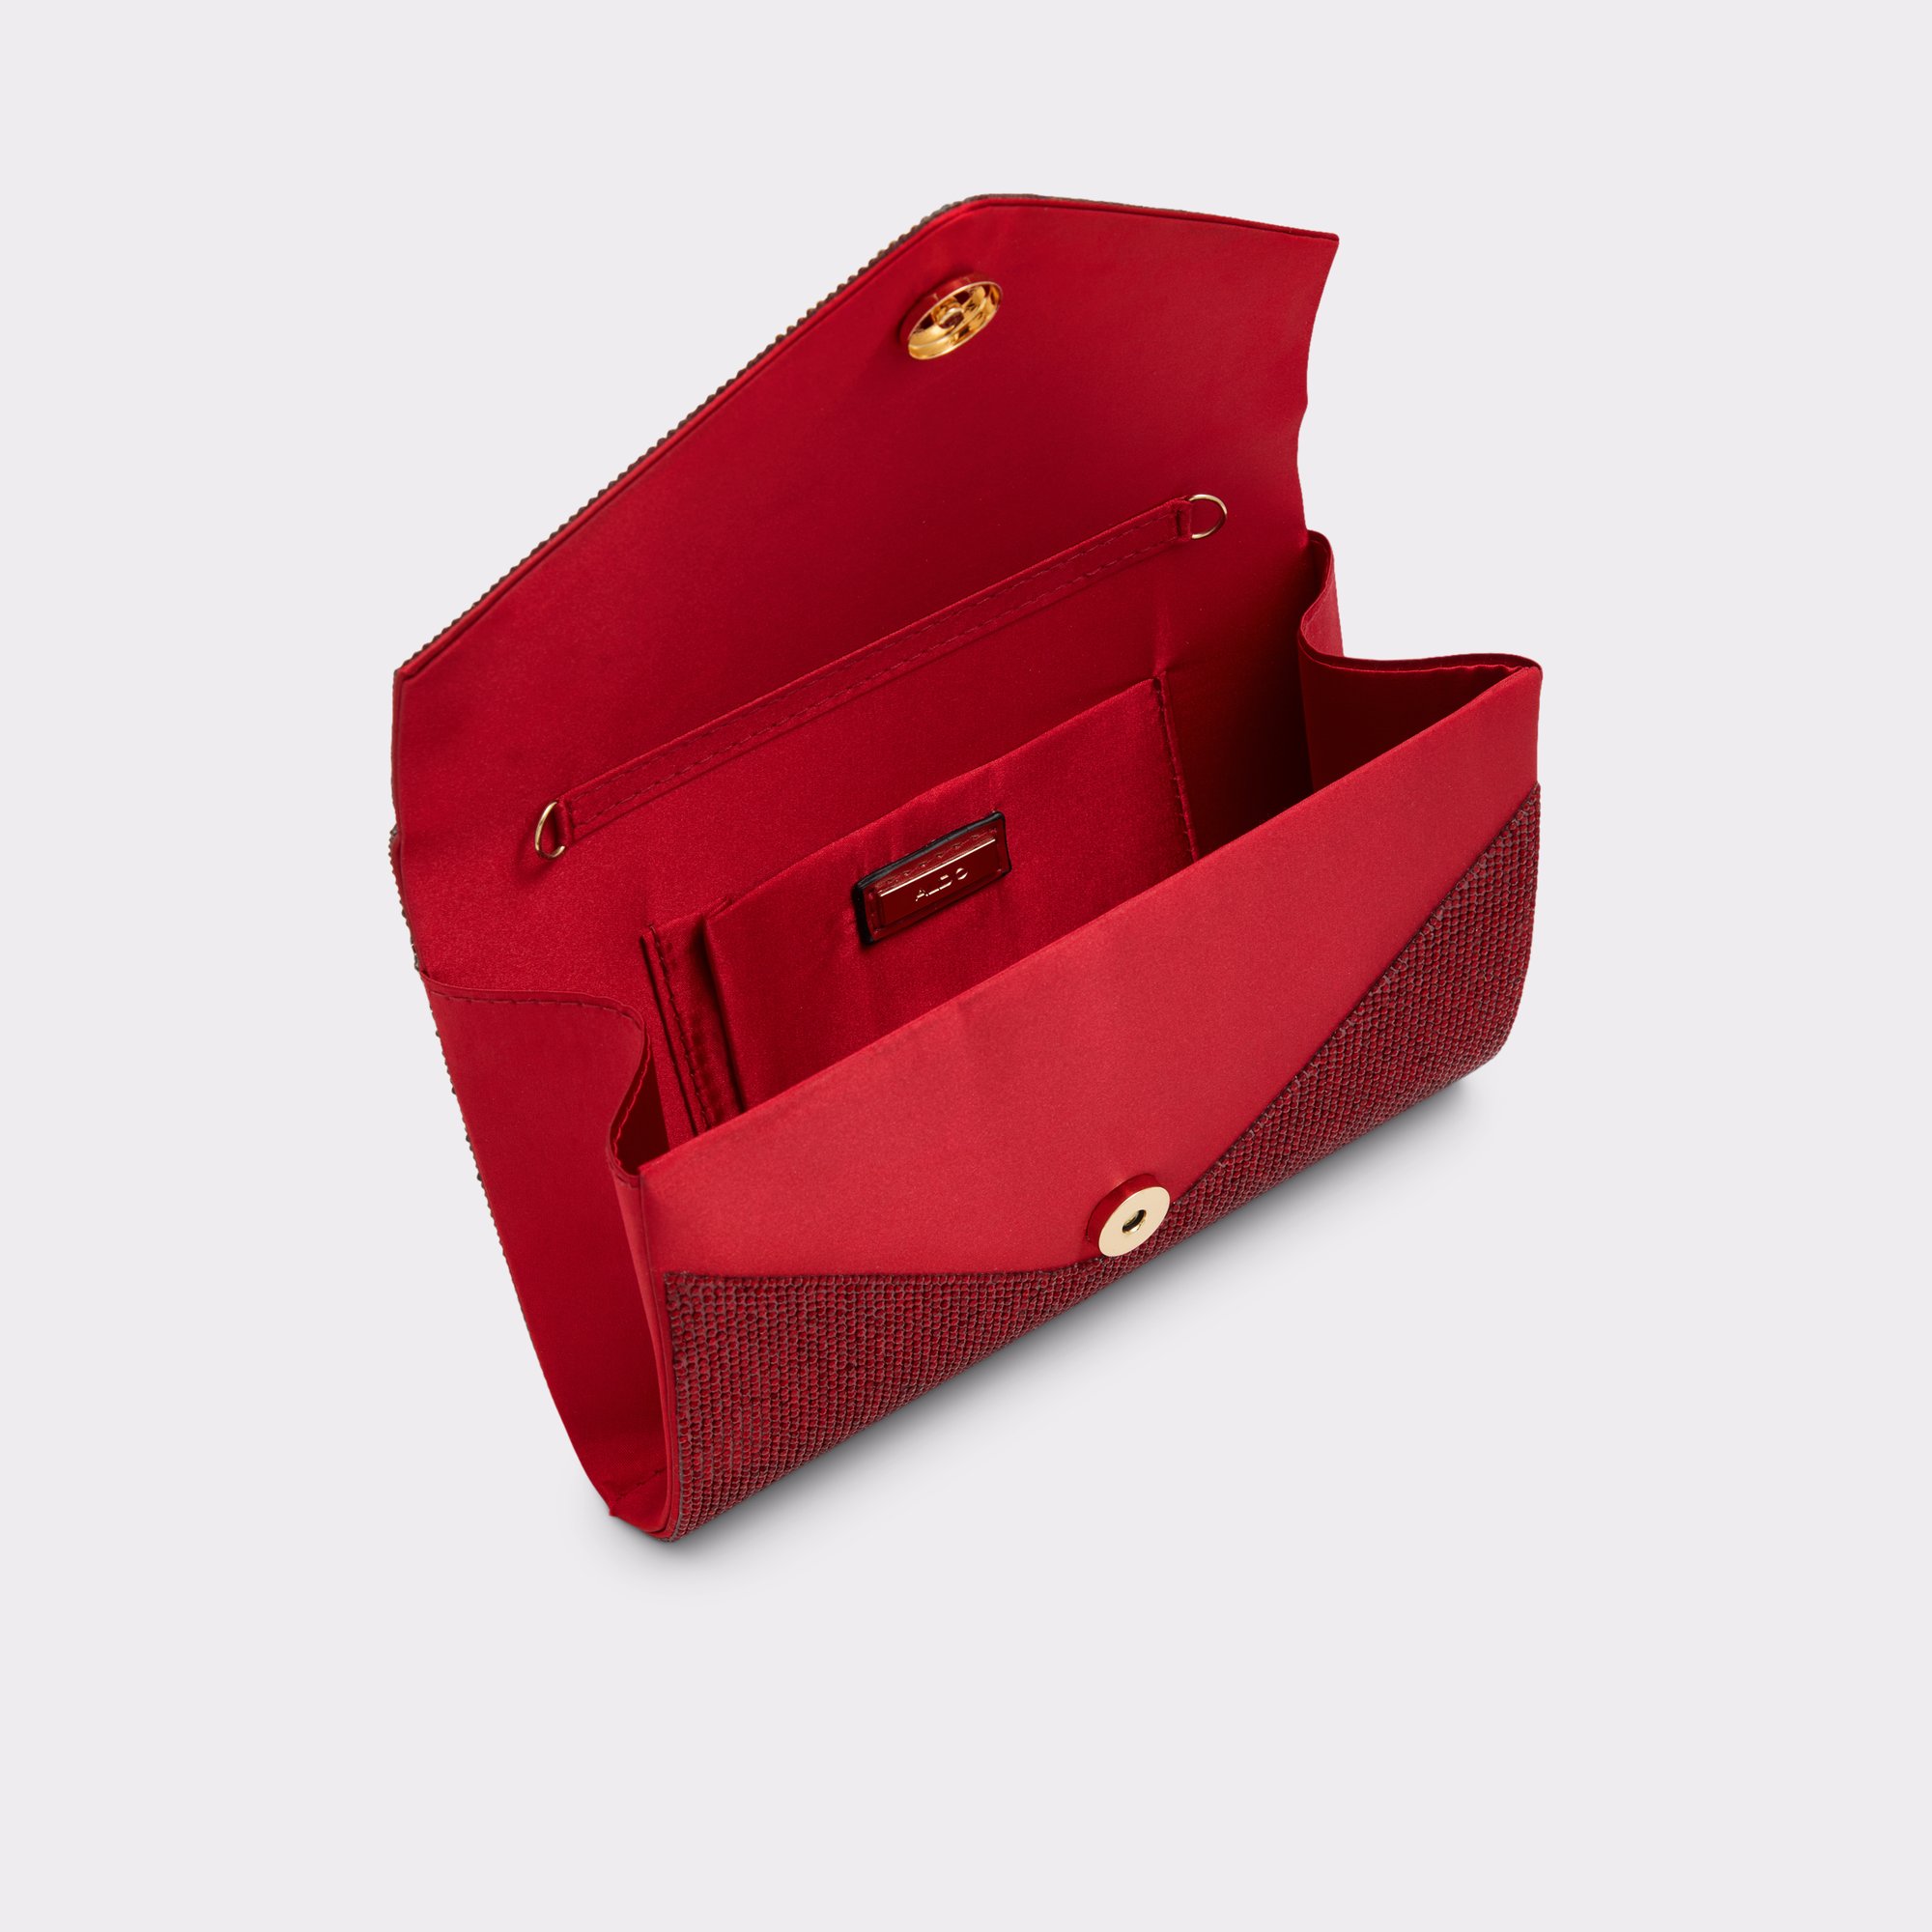 Geaven Red Women's Clutches & Evening bags | ALDO Canada